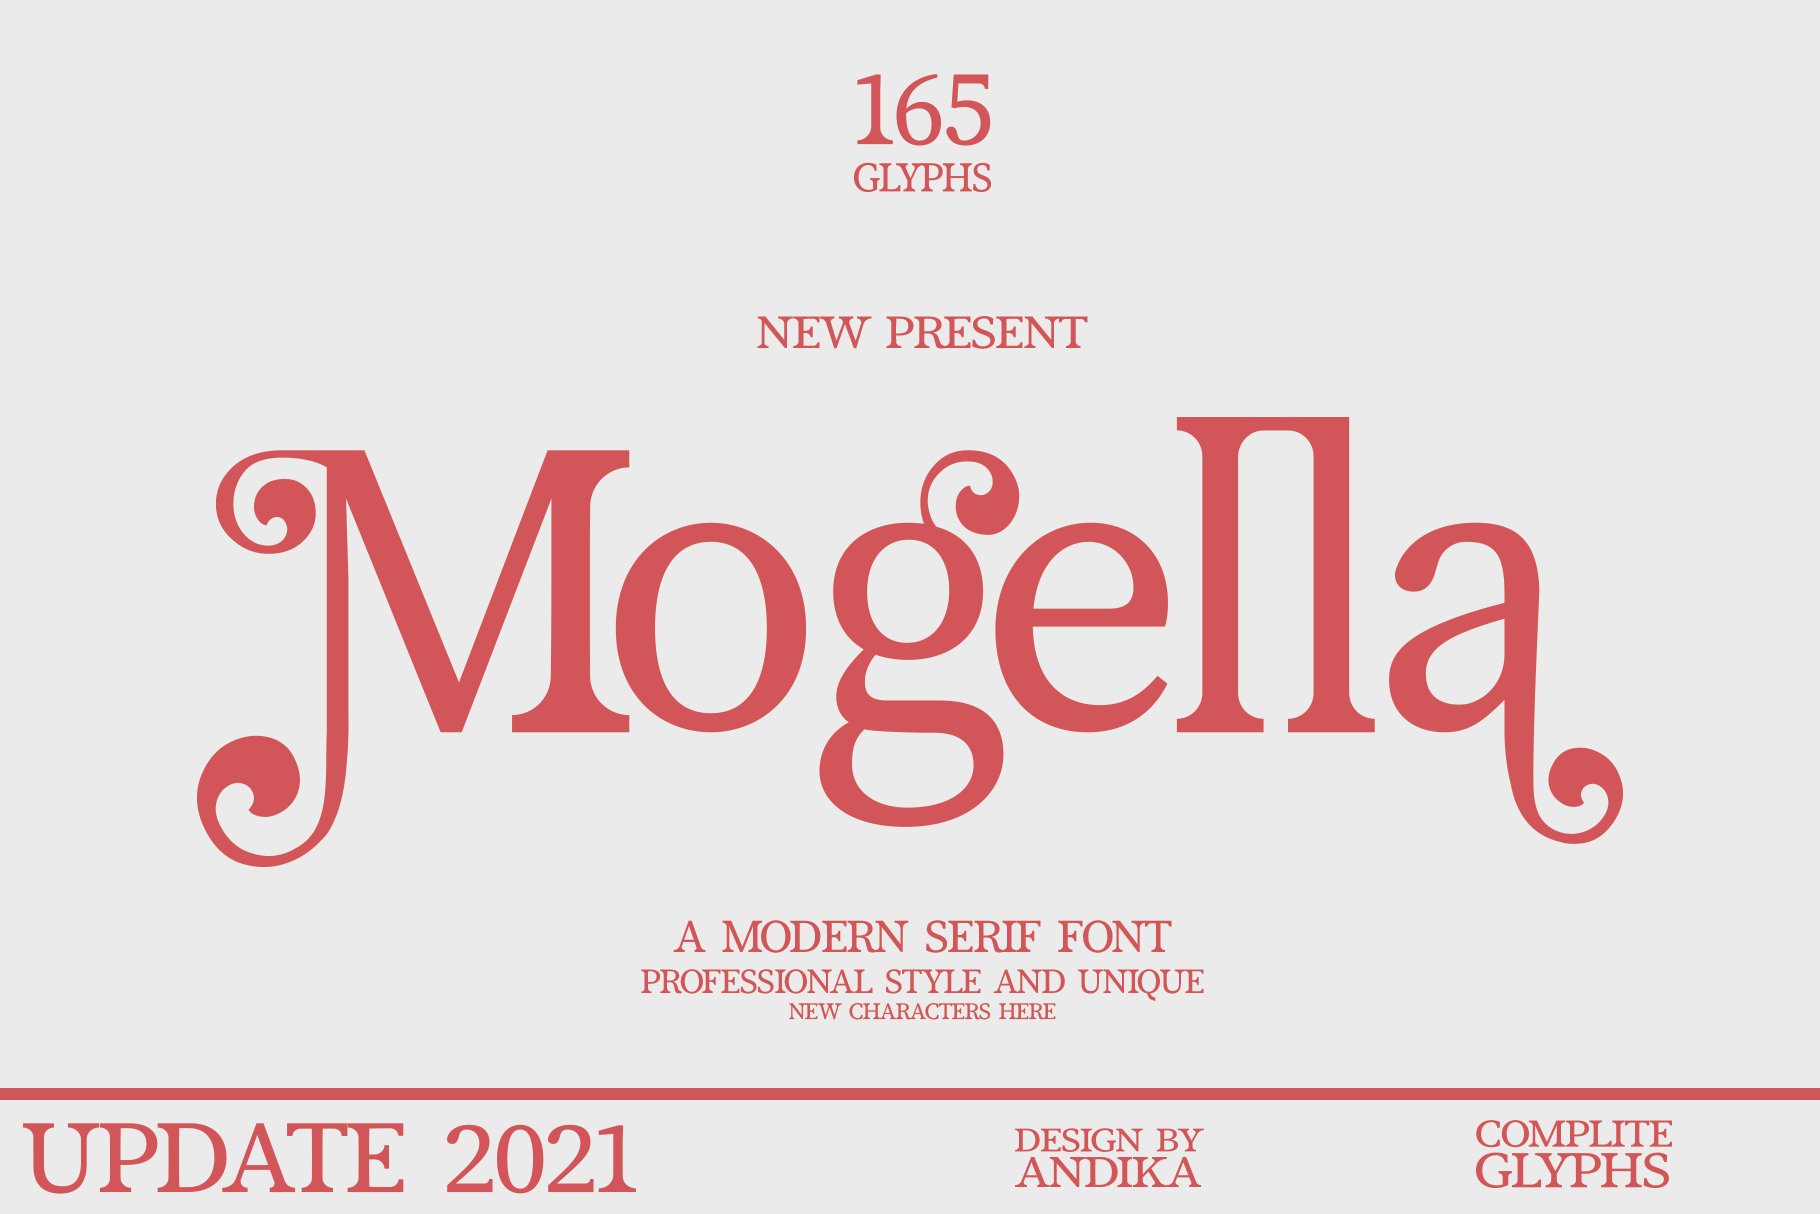 Mogella / Modern Font cover image.